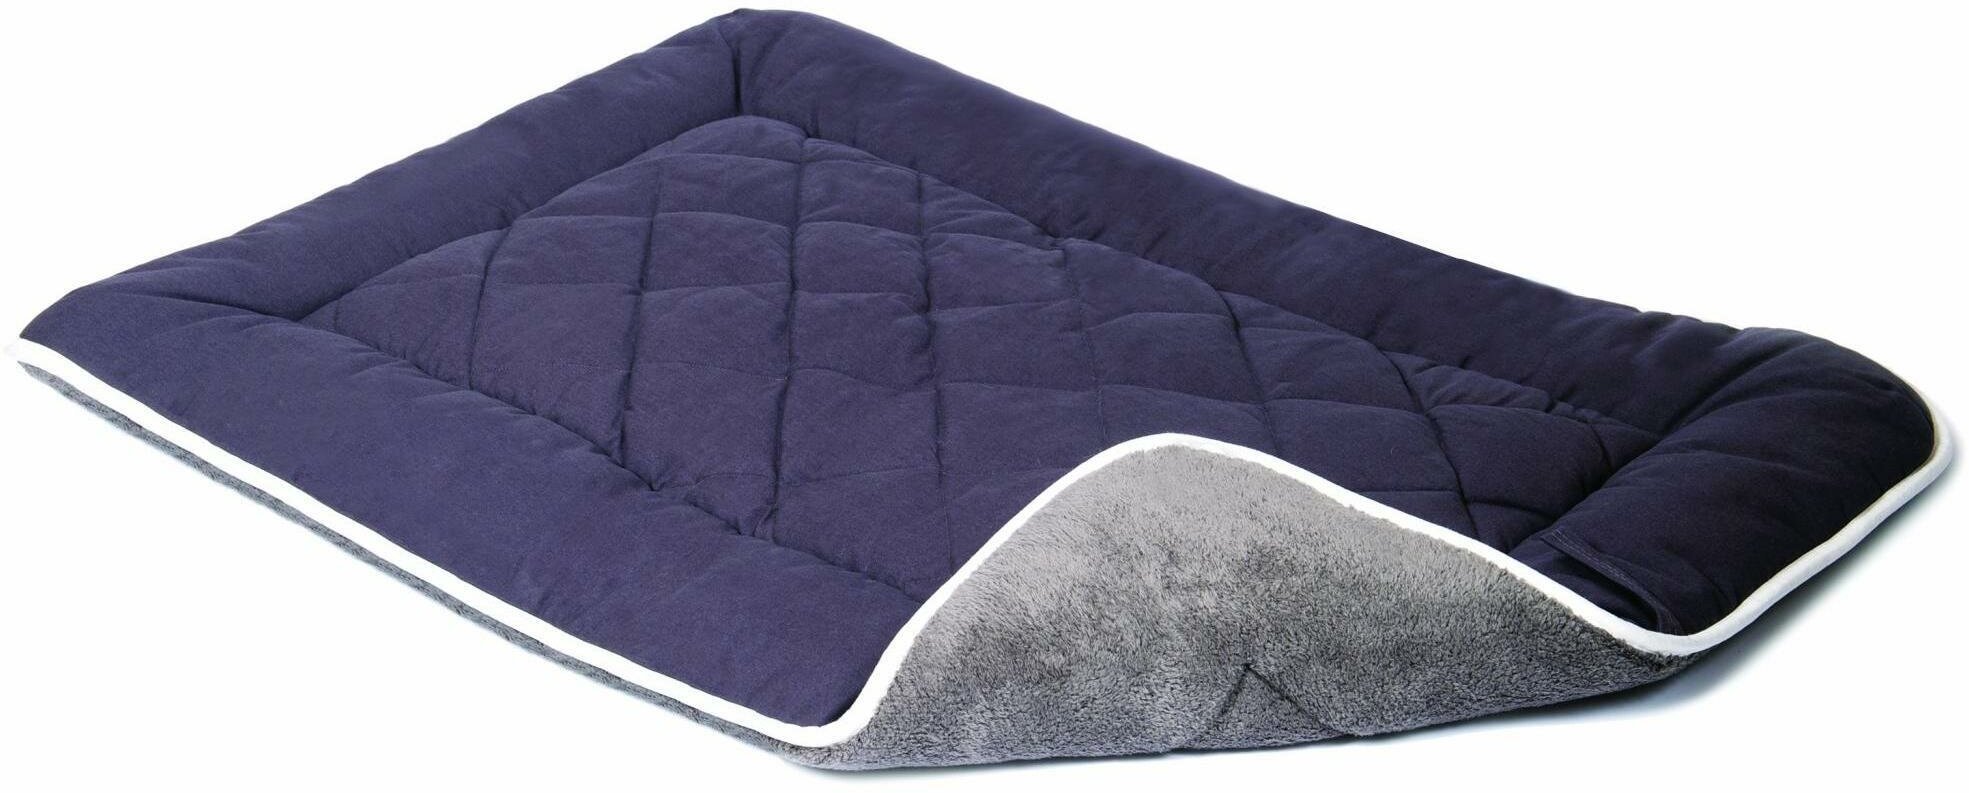 Подстилка для животных Dog Gone Smart Sleeper Cushion L, размер 55x86см, тёмно-серая